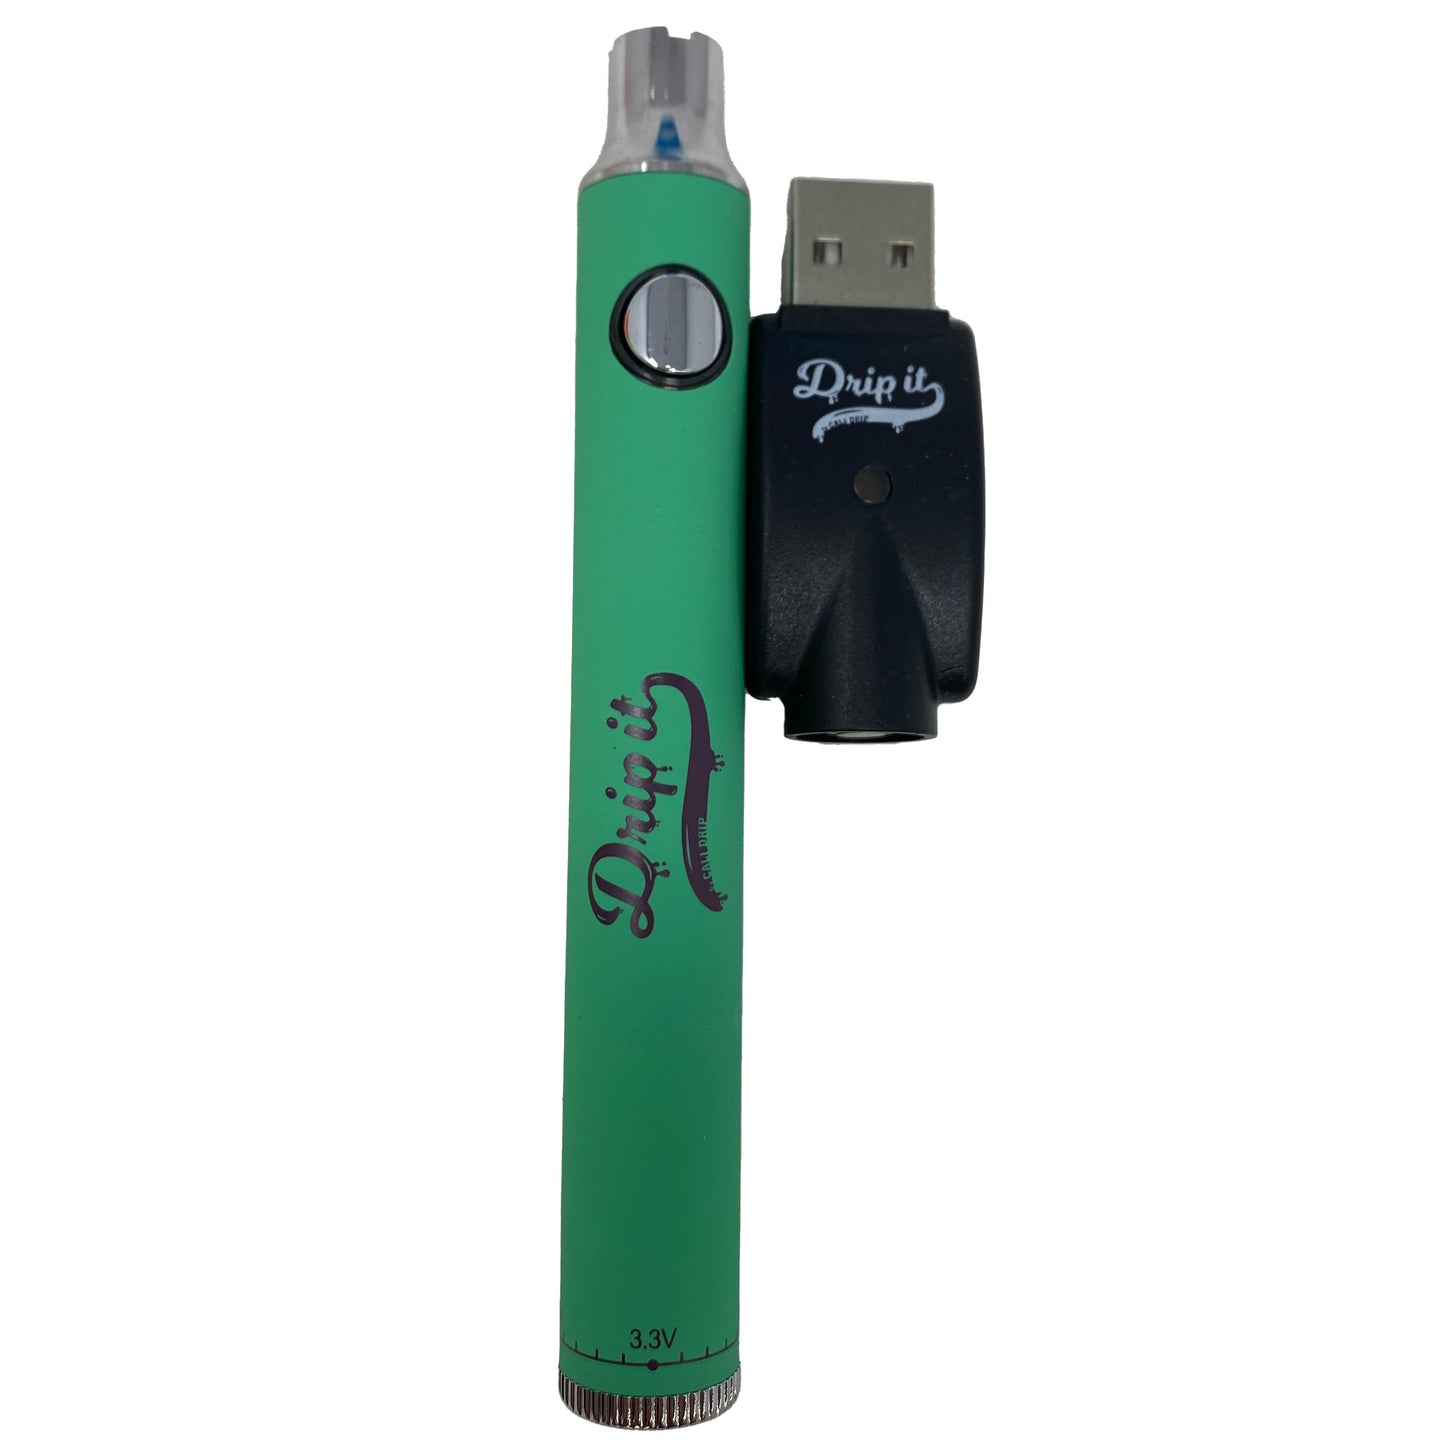 DRIPIT Reusable Battery Pen